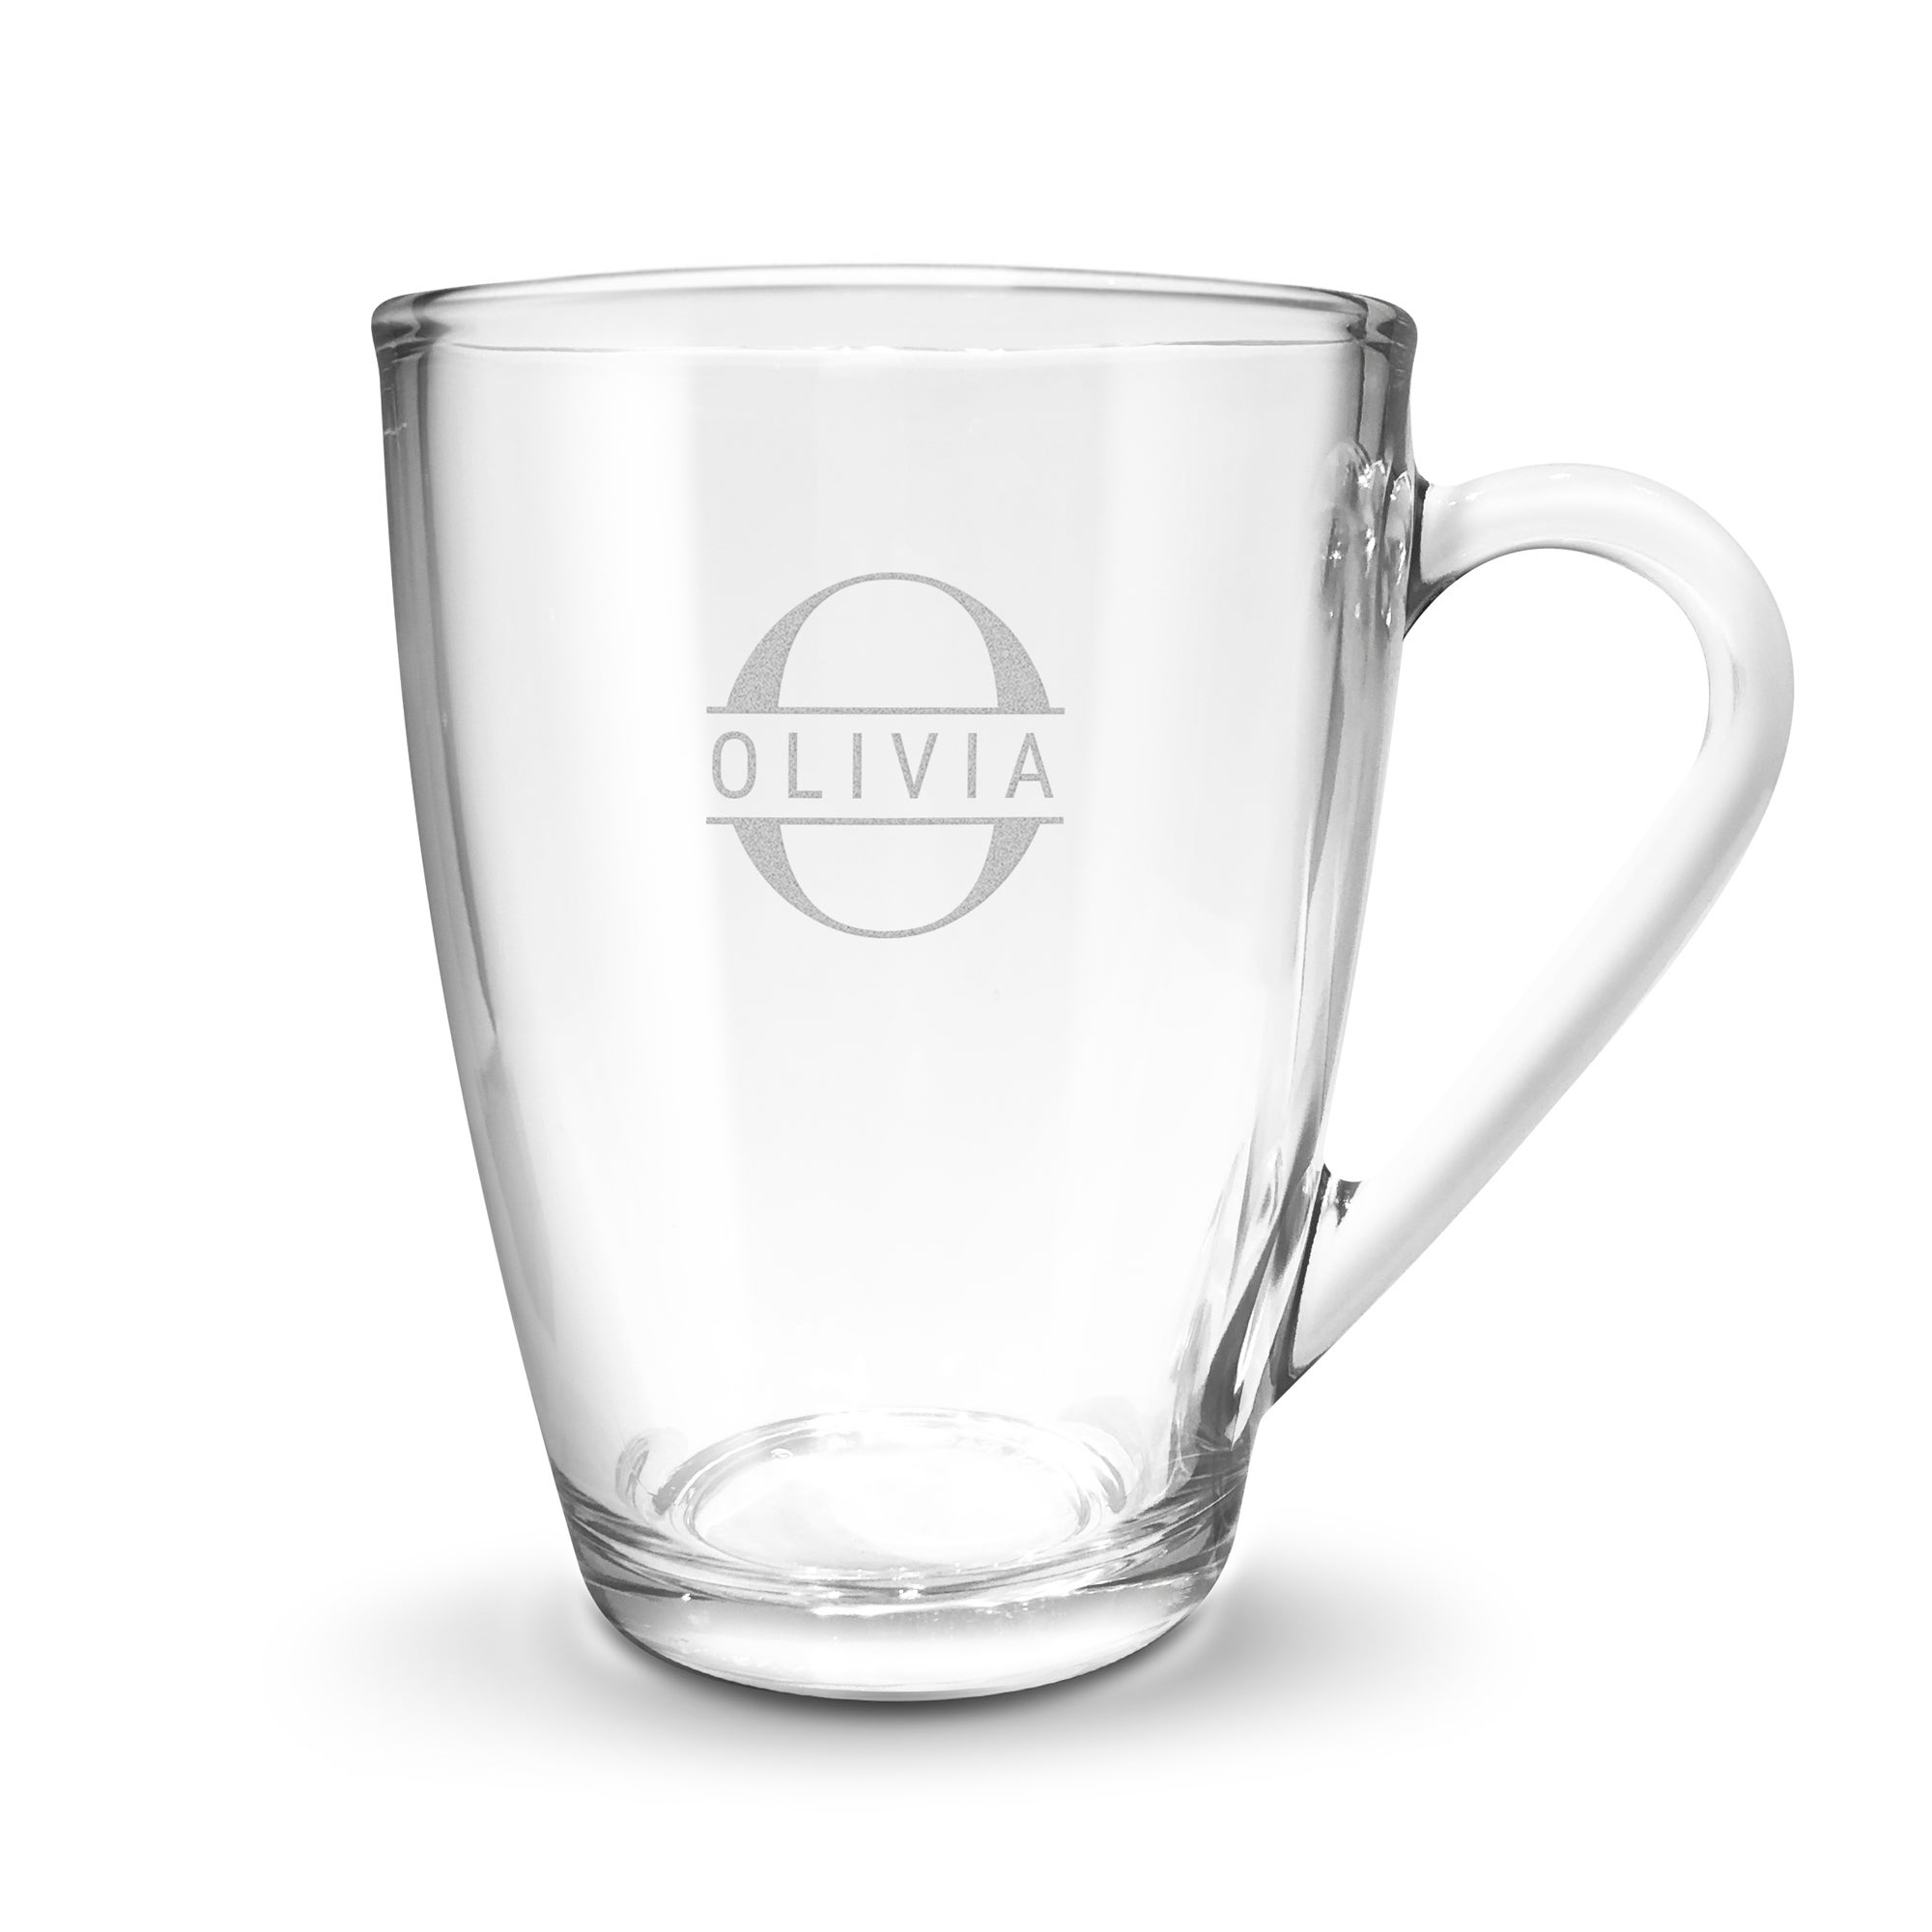 Personalised glass mug - 6 pcs - Engraved